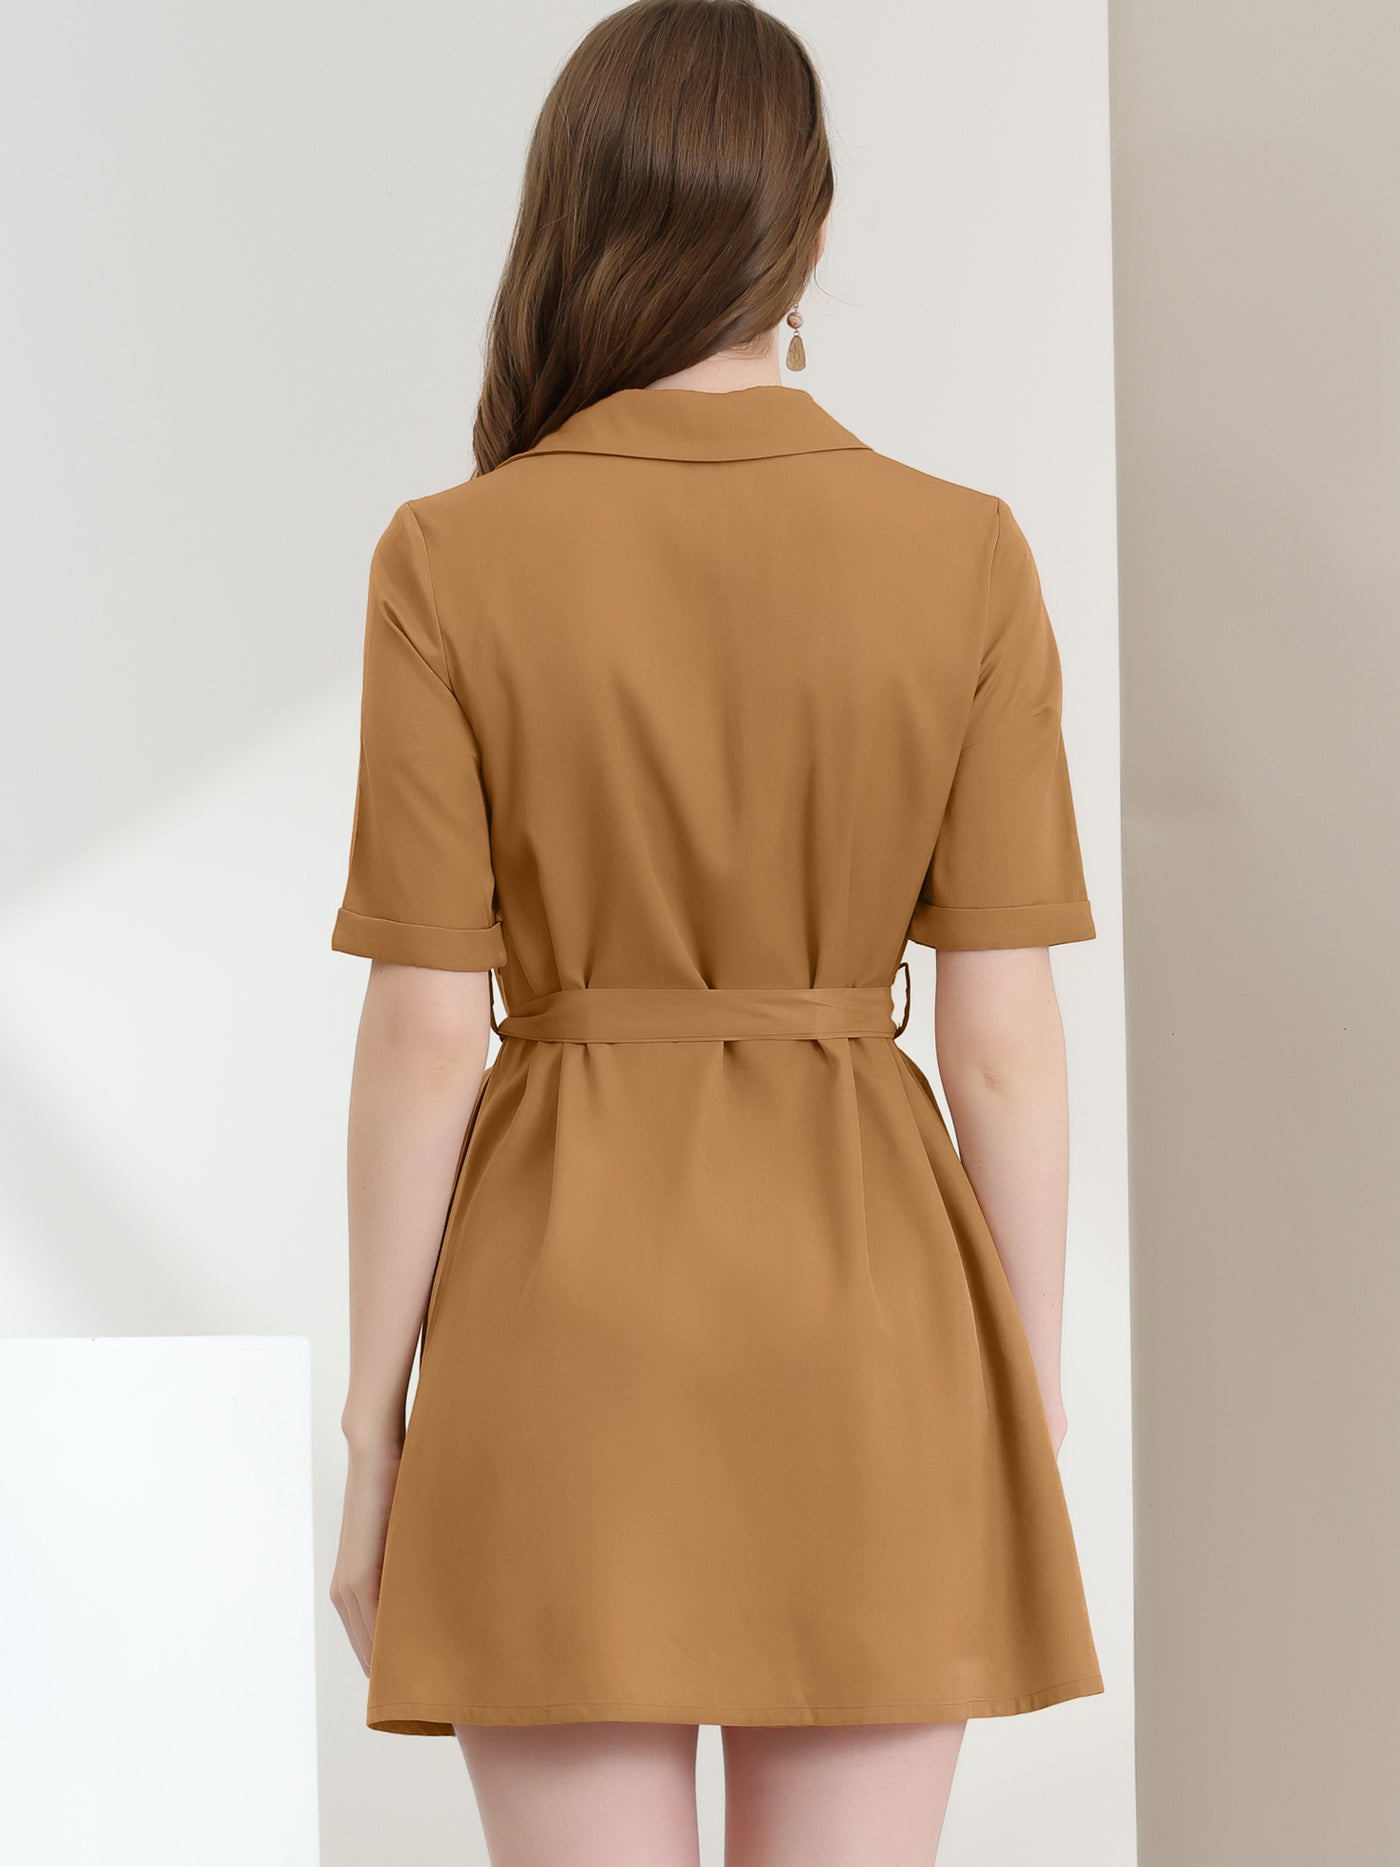 Allegra K Safari Dresses for Women's Short Sleeve A-Line Belted Button Up Dress